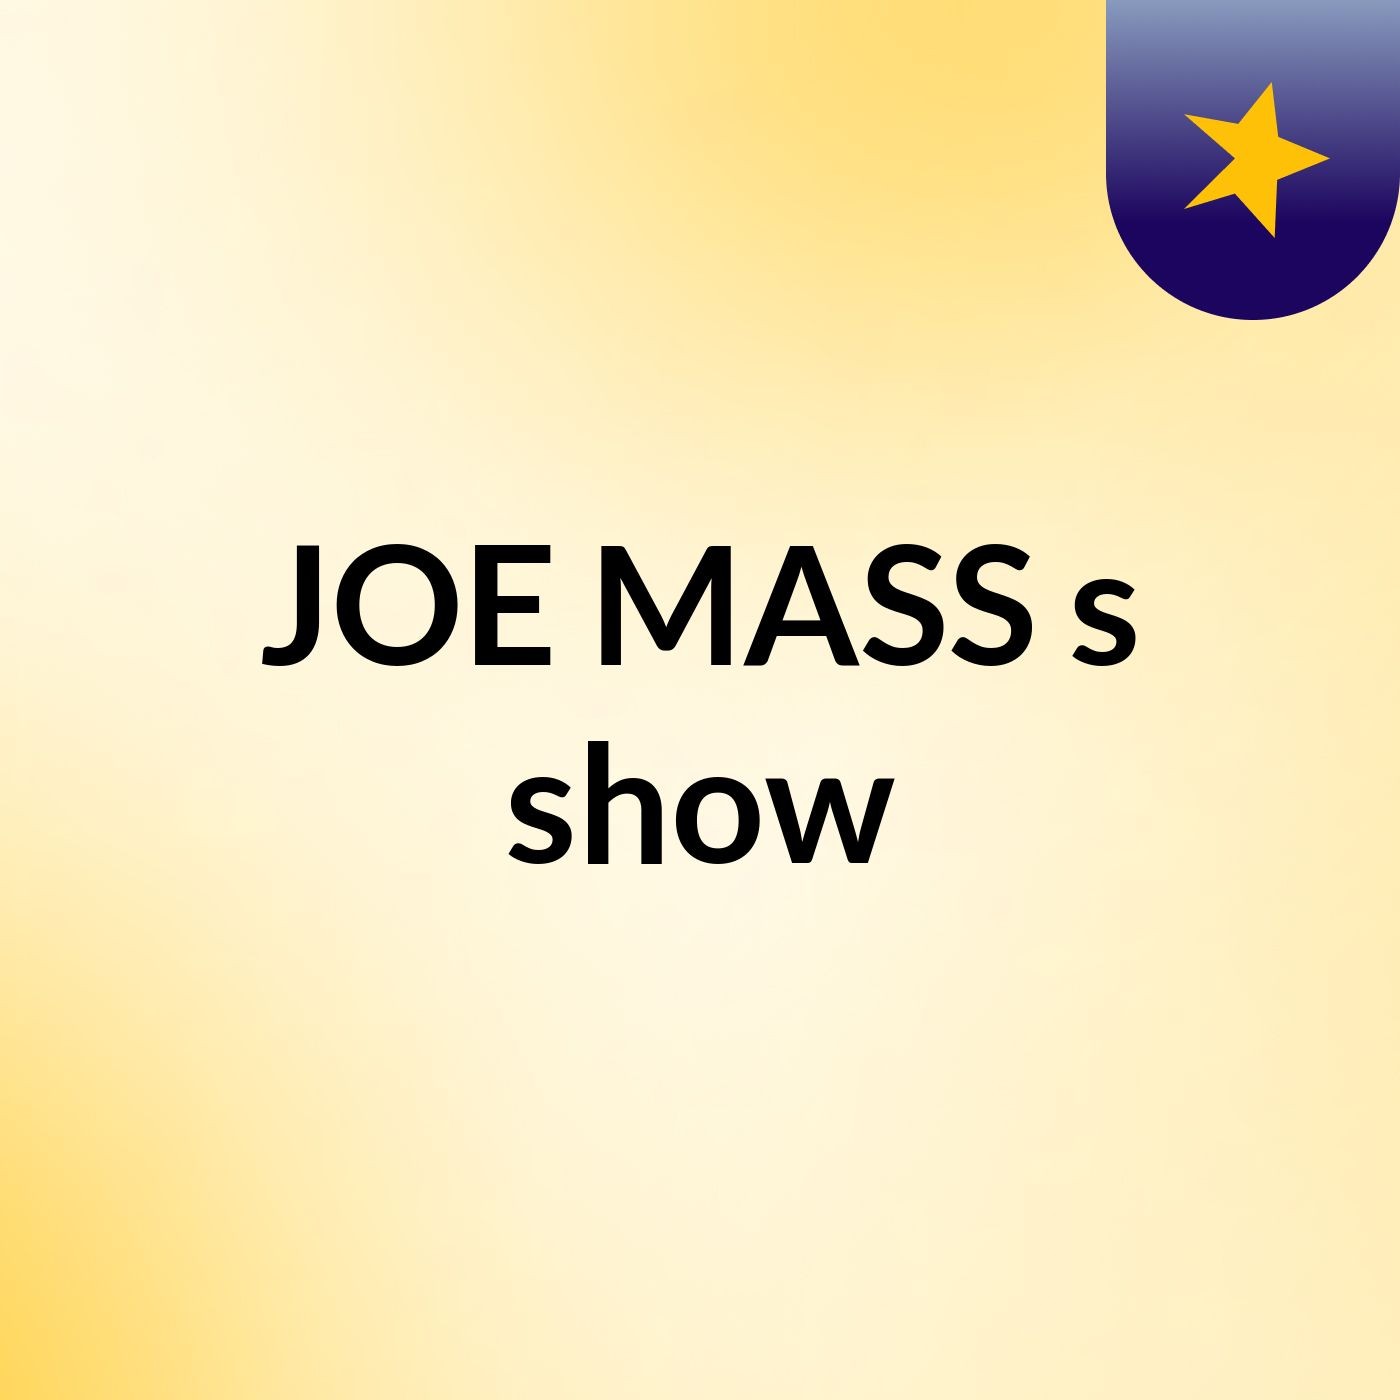 JOE MASS's show